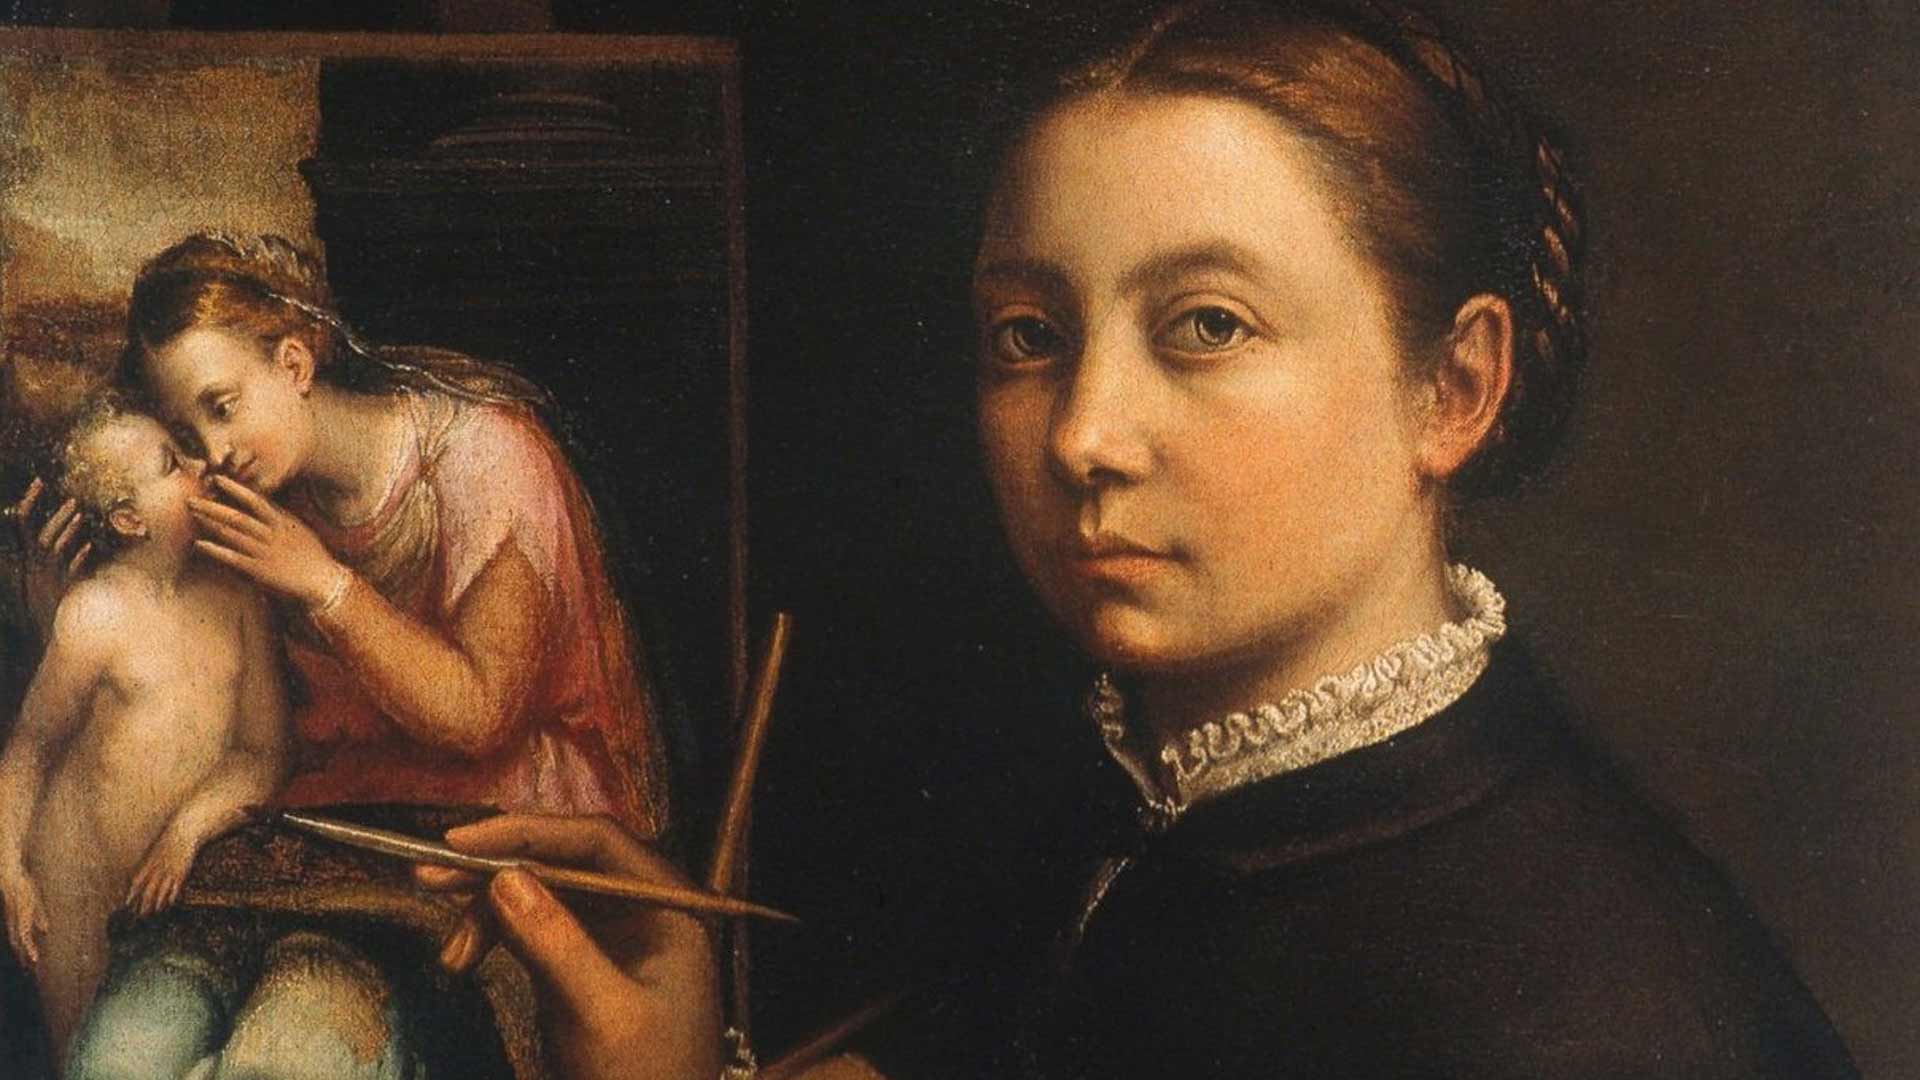 Sofonisba Anguissola y Lavinia Fontana, dos estrellas de la pintura olvidadas por la Historia